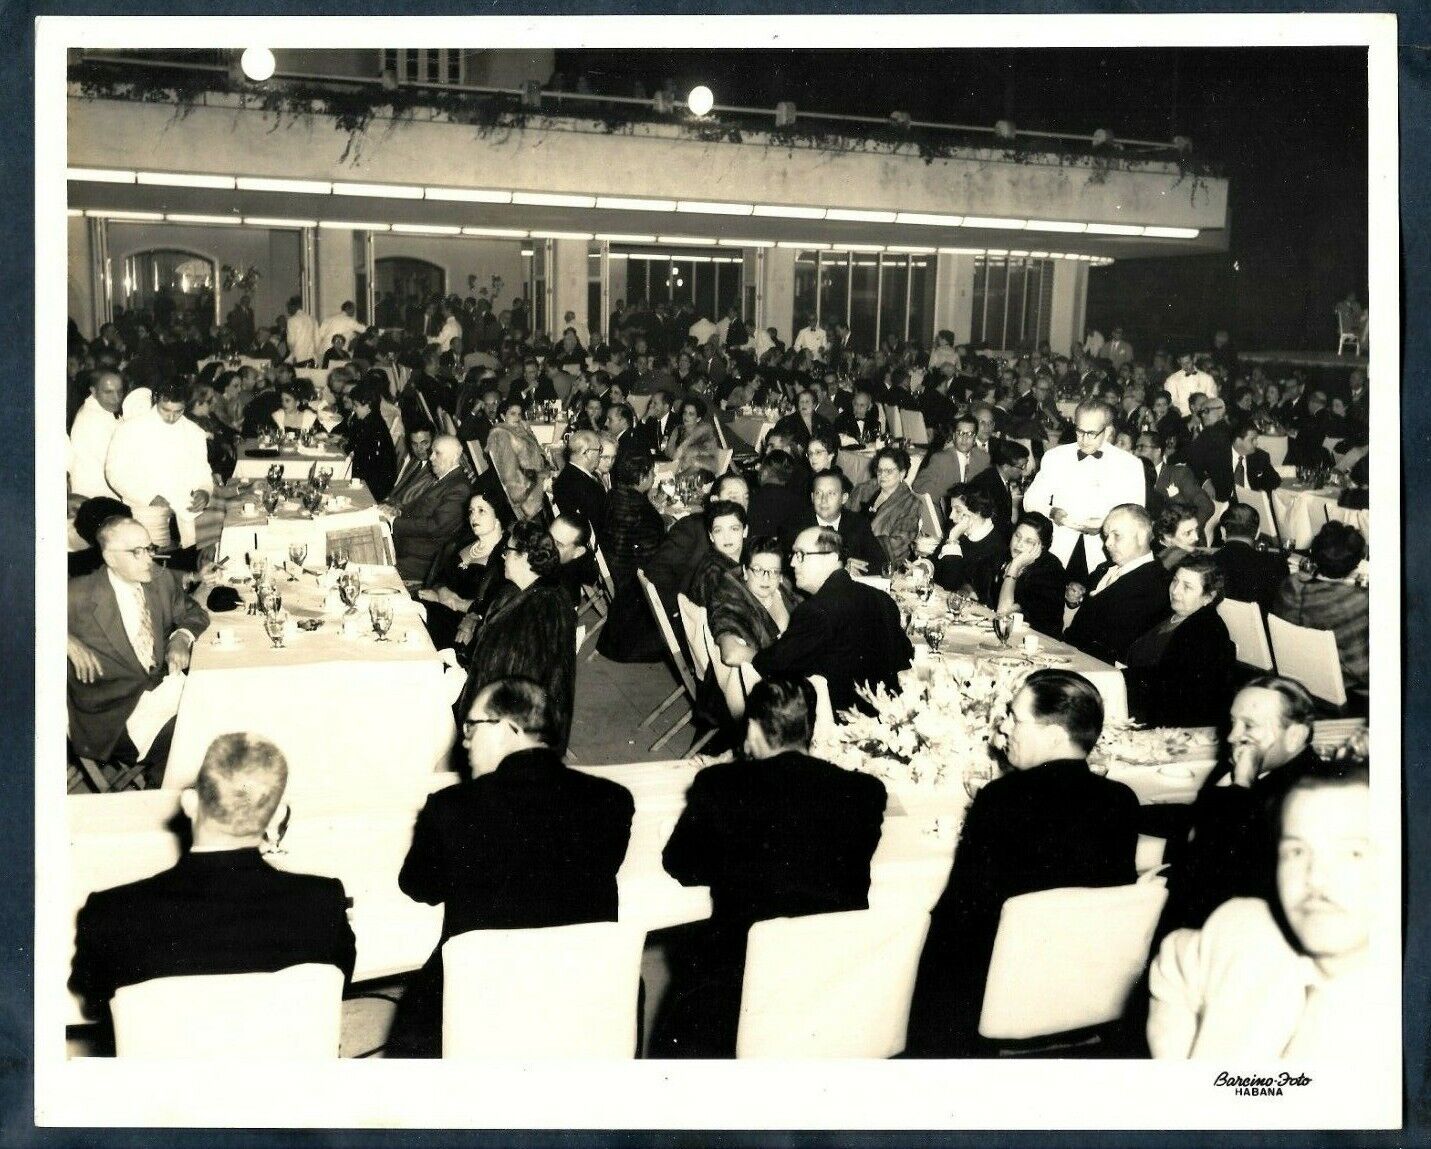 HIGH SOCIETY CELEBRATION HAVANA YATCH CLUB PARTY CUBA 1954 BARCINO Photo Y 245